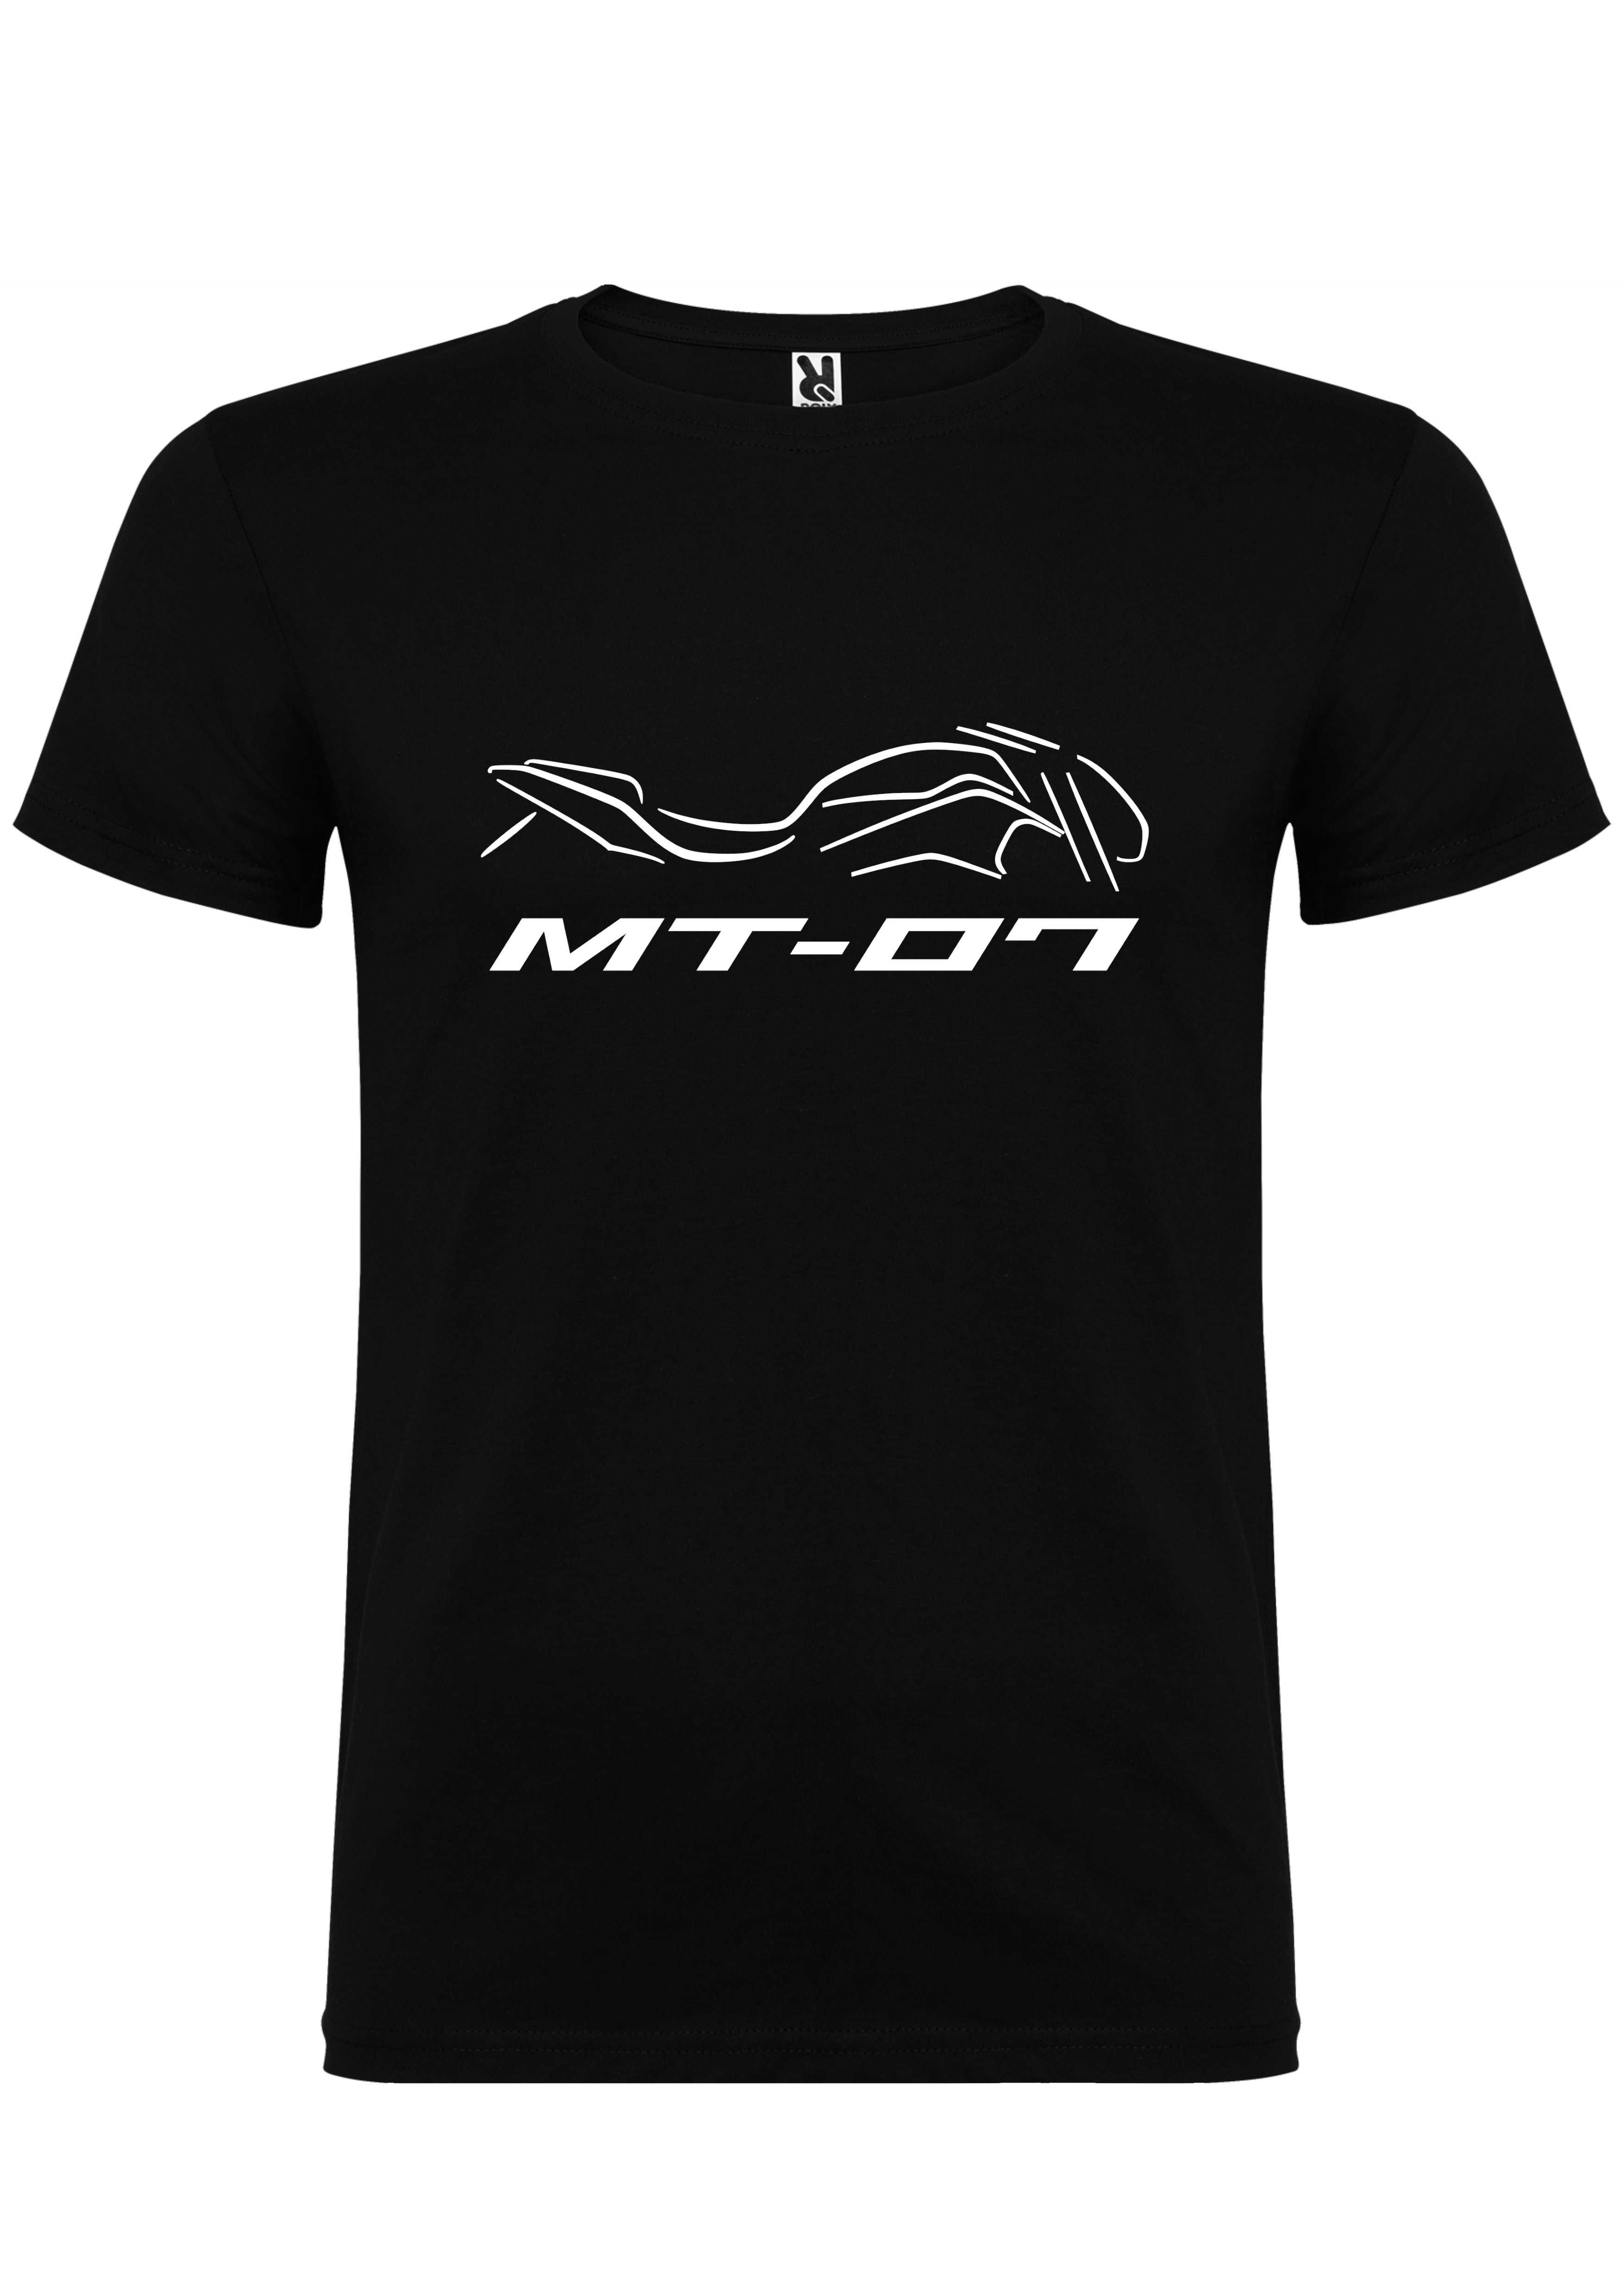 T-shirt Yamaha MT-07 moto perfil